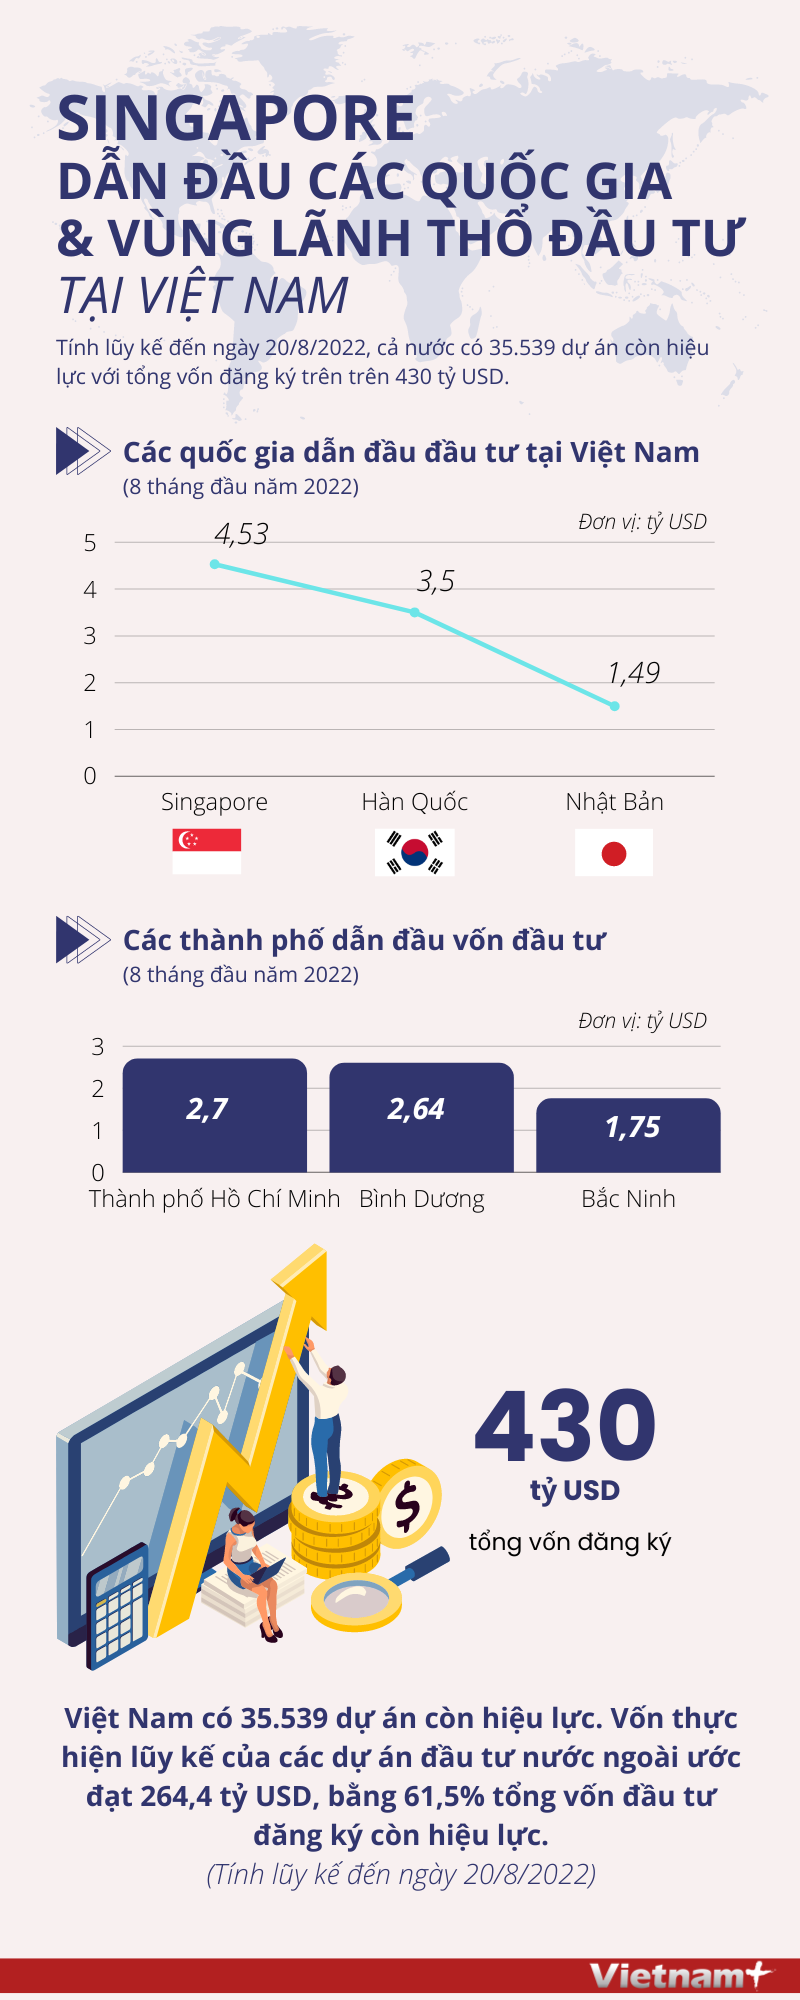 [Infographics] Singapore dan dau cac quoc gia hinh anh 1